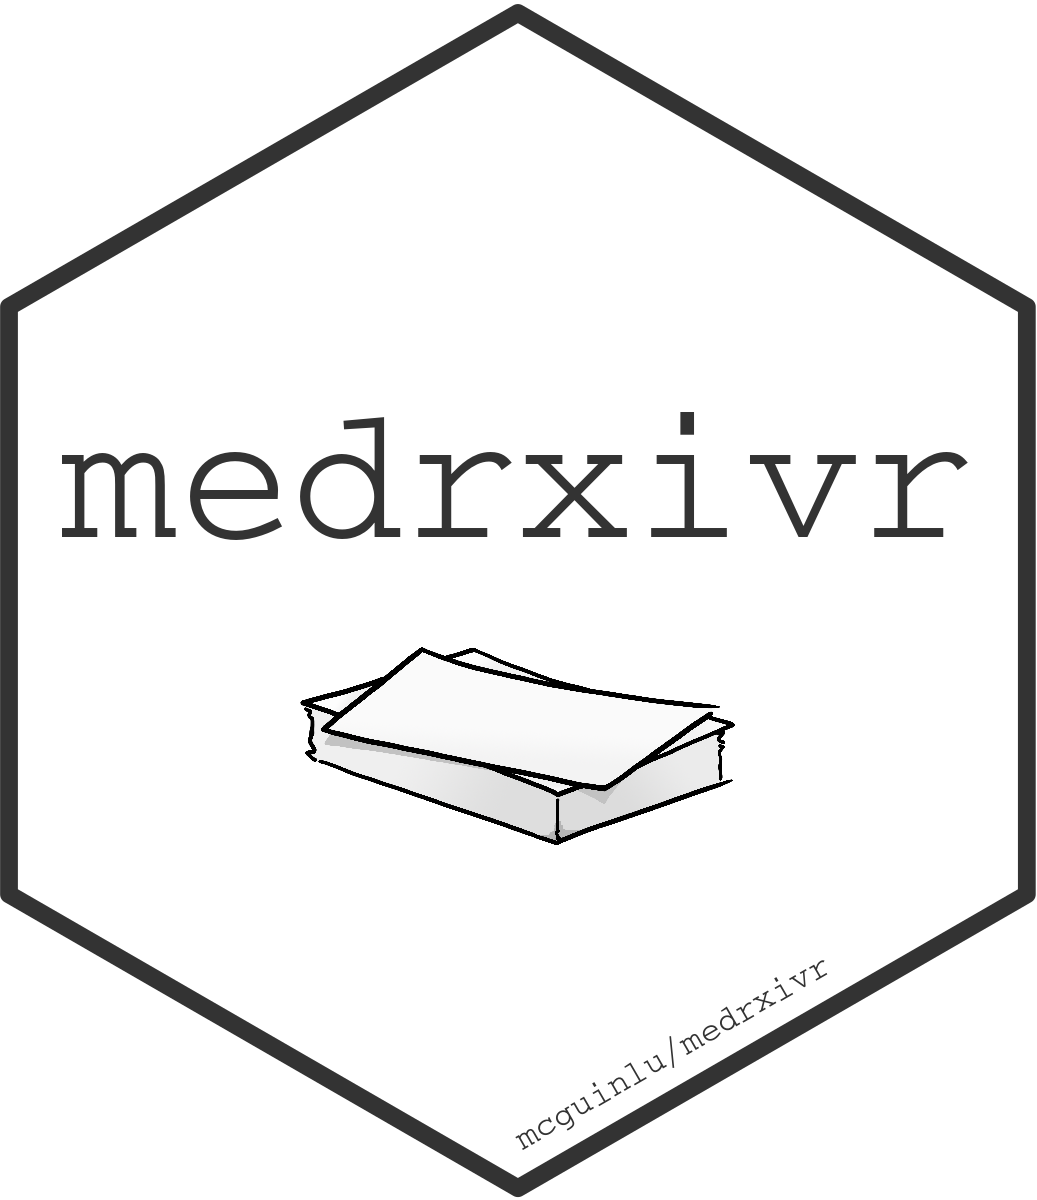 hex logo of R package medrxivr